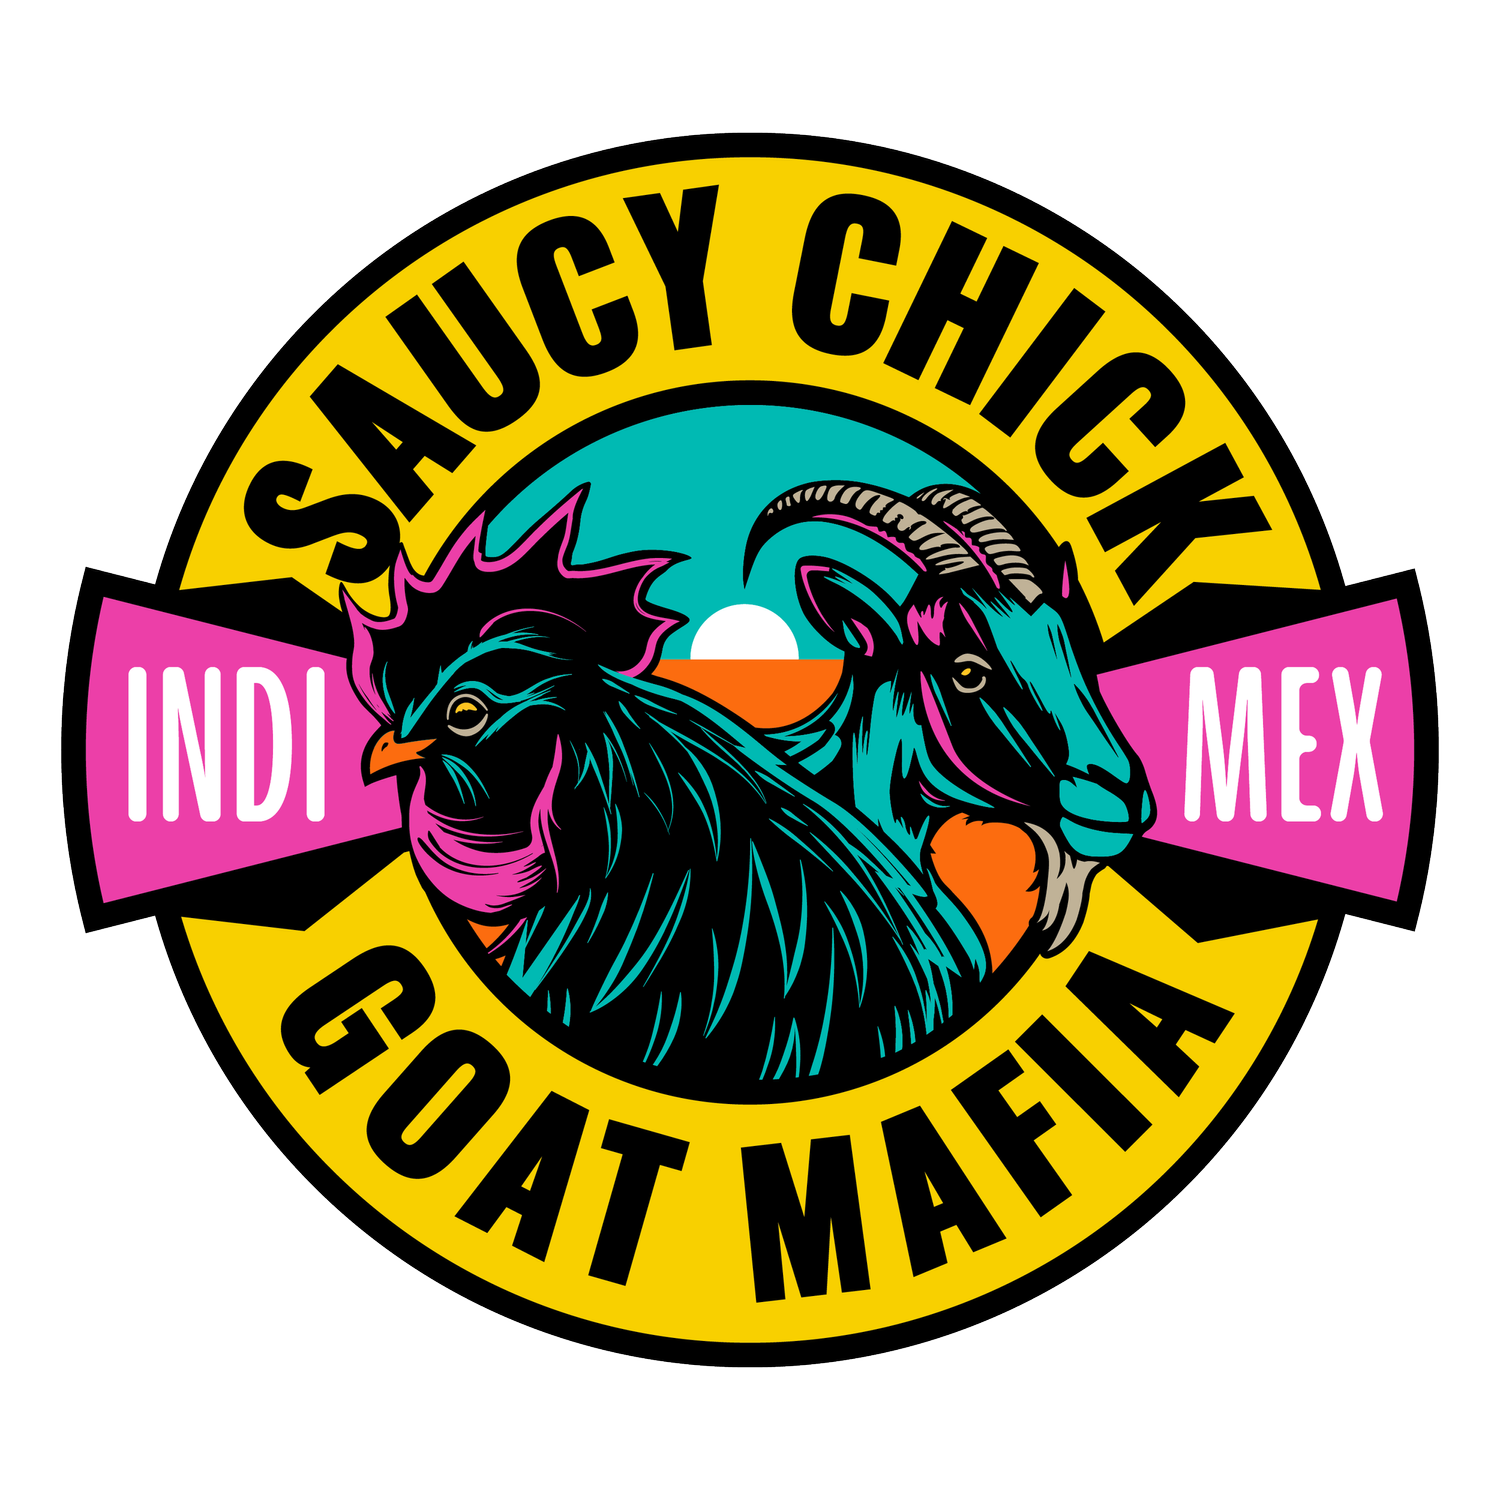 Saucy Chick Goat Mafia